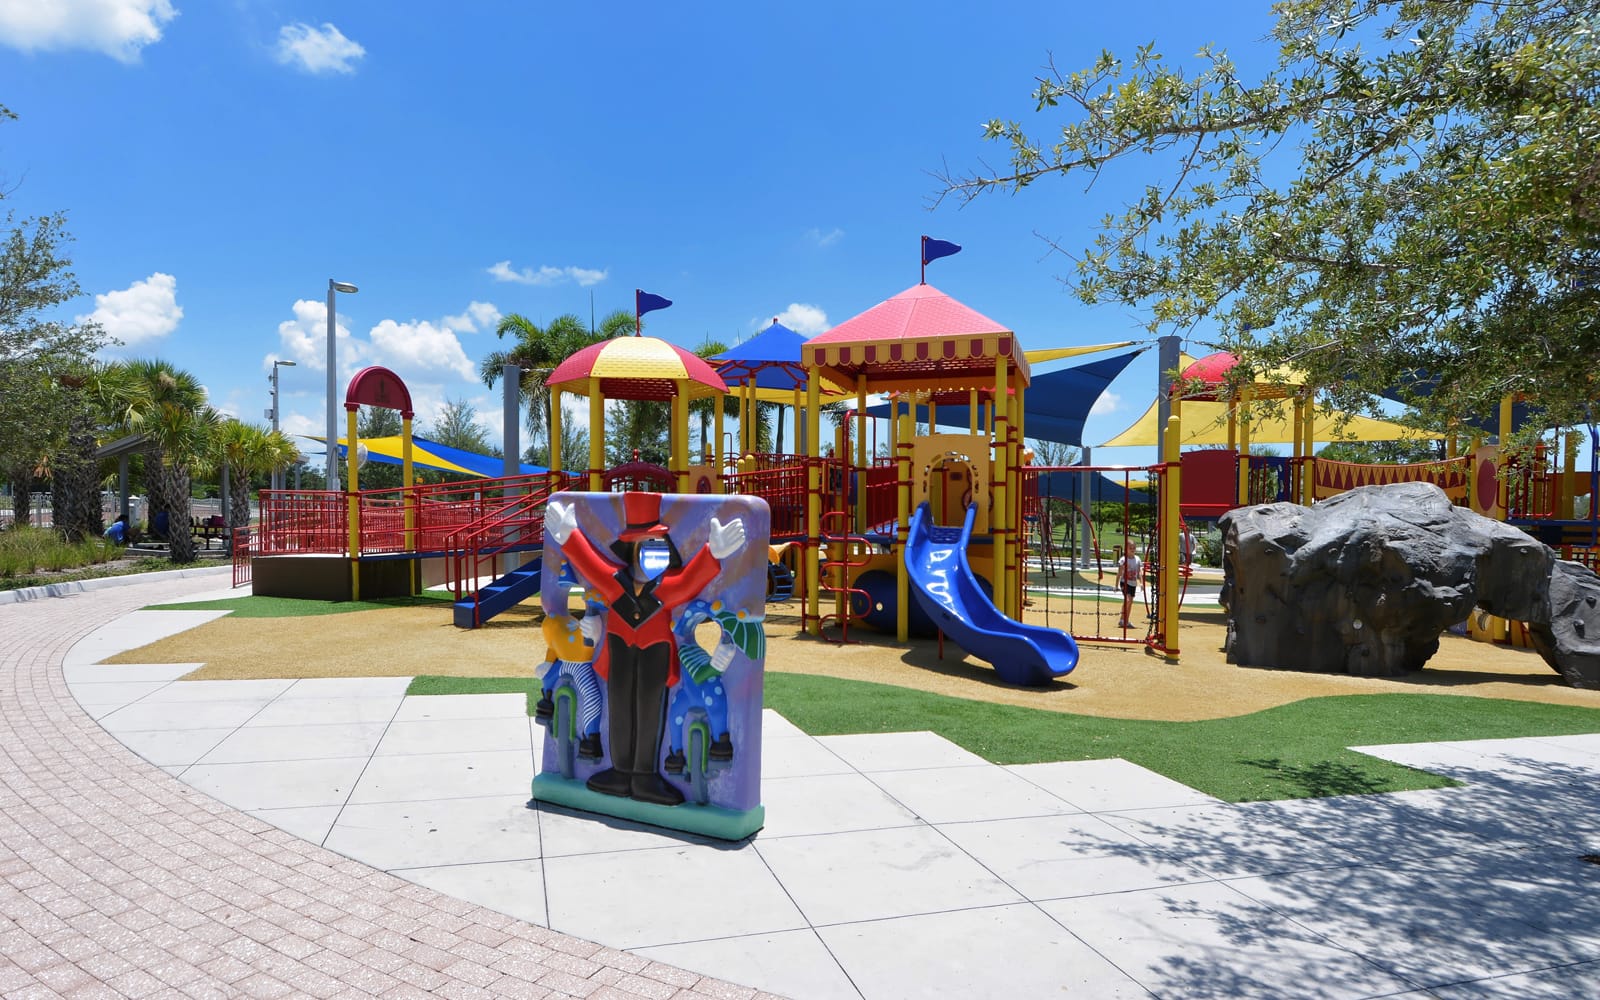 The Circus Themed Playground at Payne Park, Sarasota FL